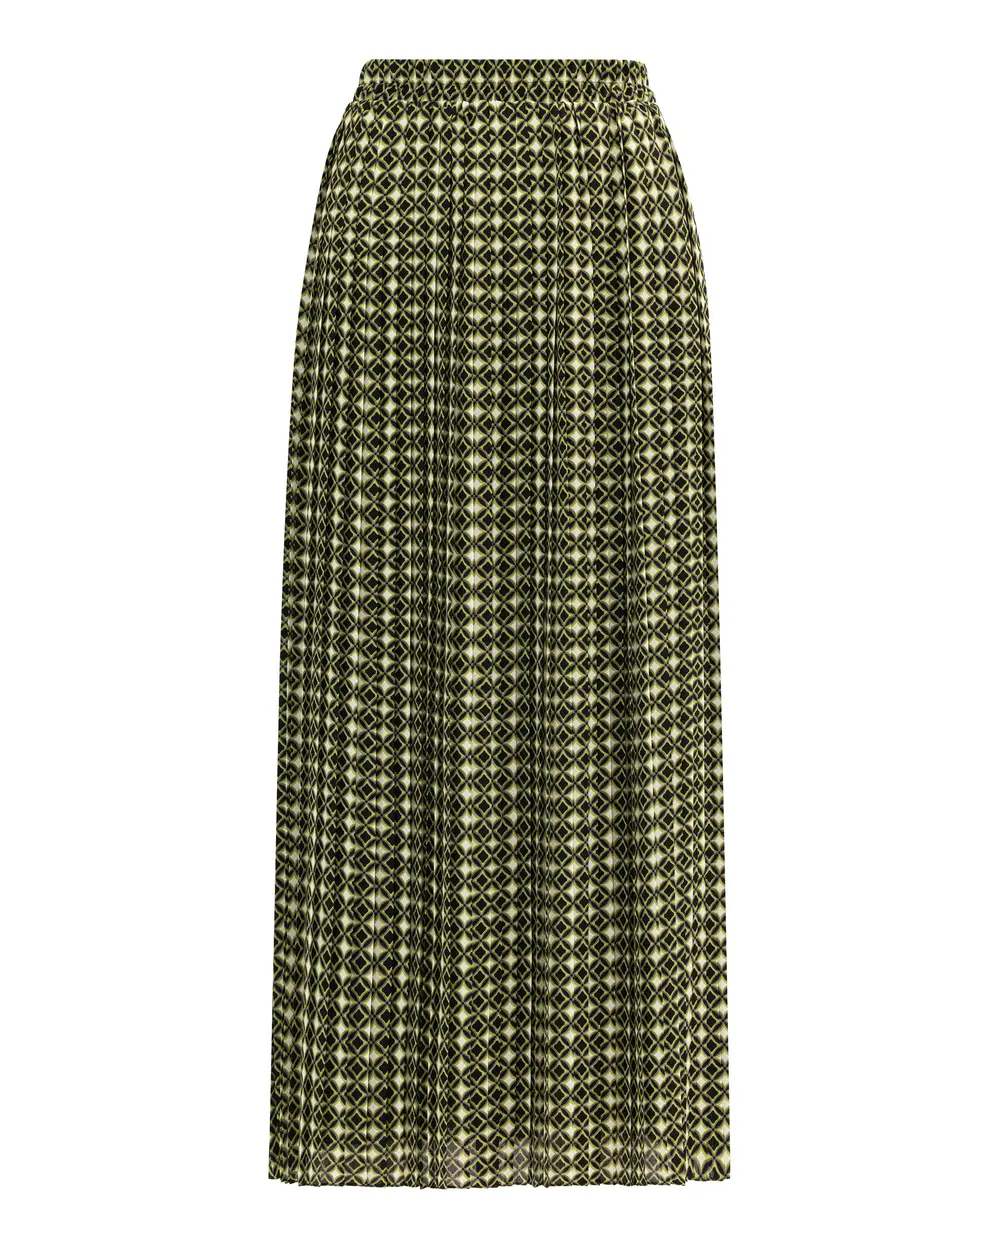 Geometric Patterned Pleated Skirt